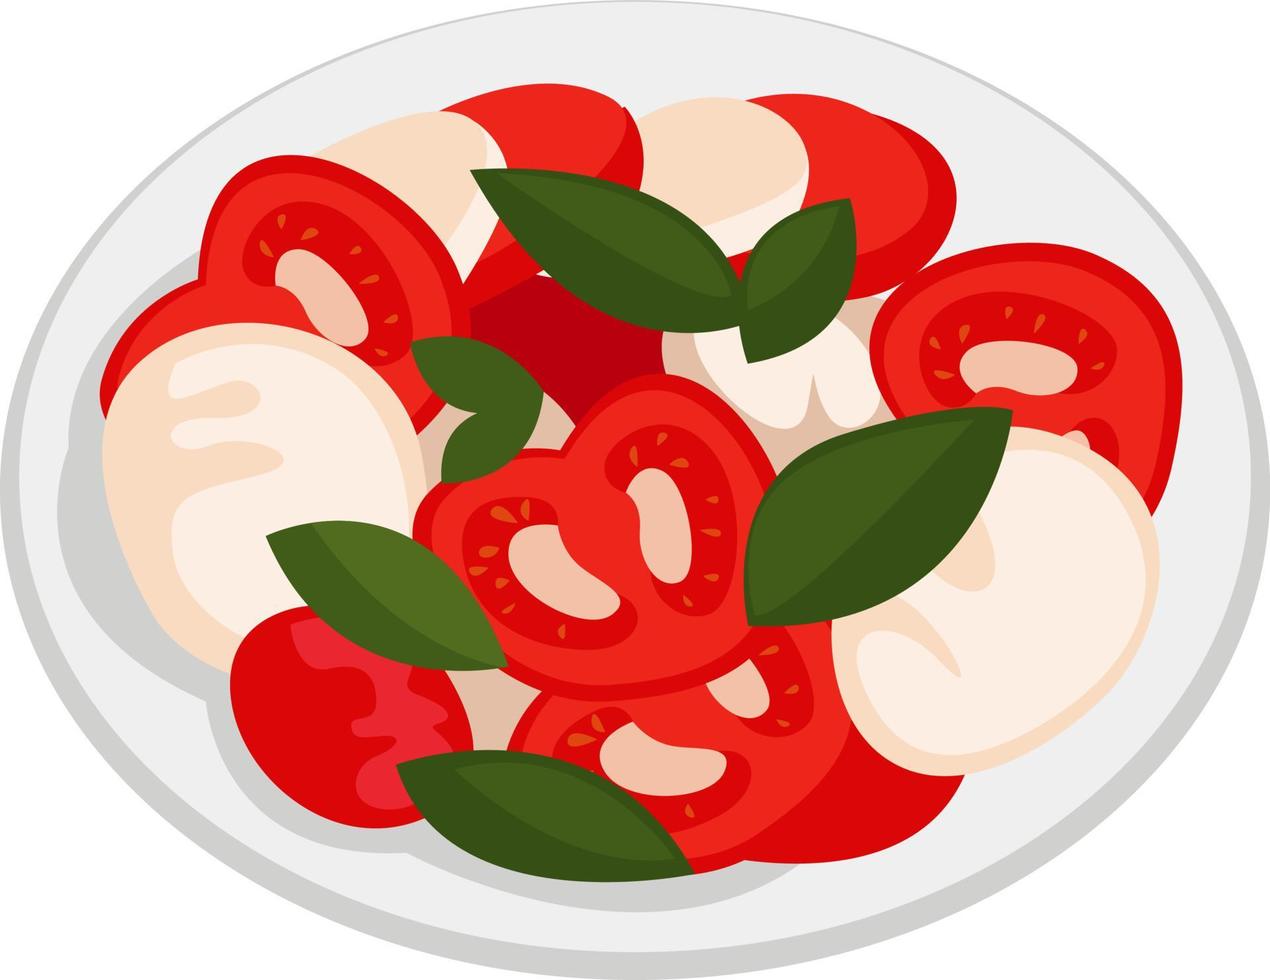 Caprese salad, illustration, vector on white background